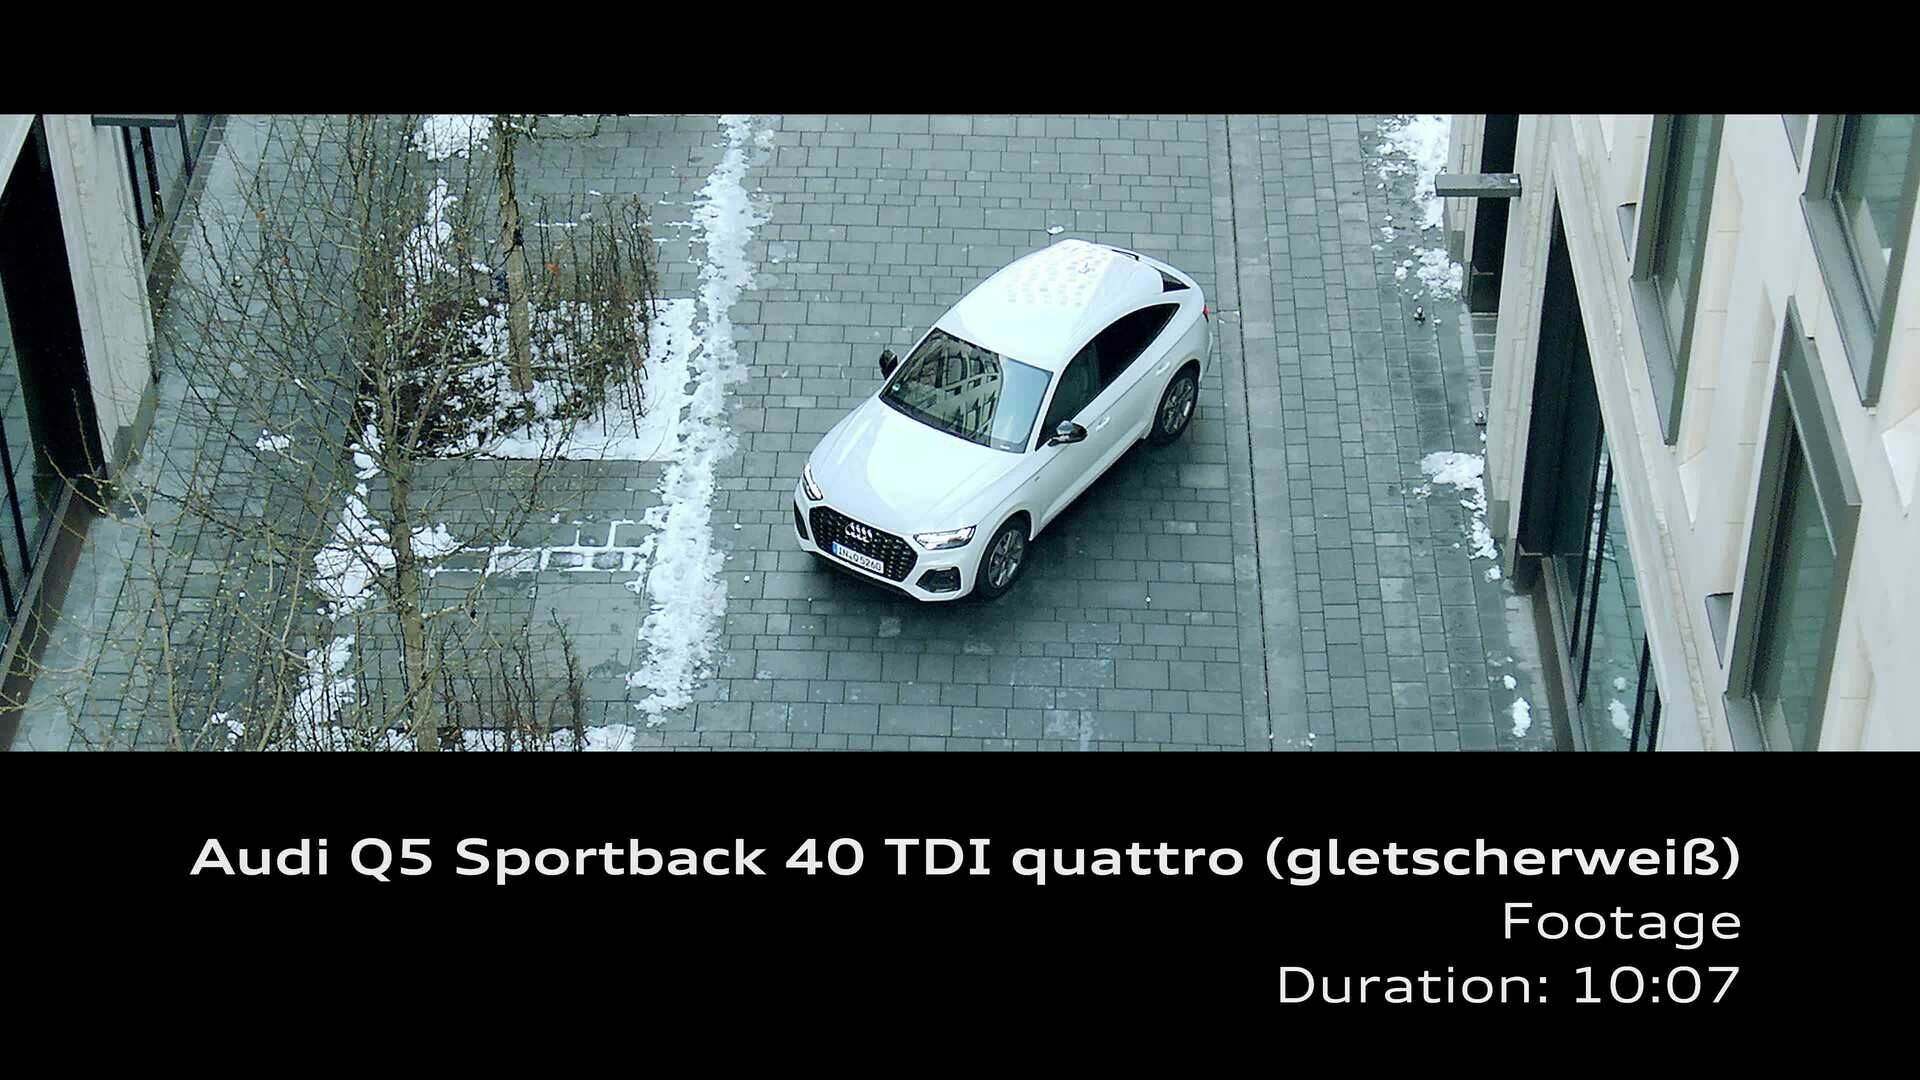 Footage Audi Q5 Sportback 40 TDI quattro (Glacier white)